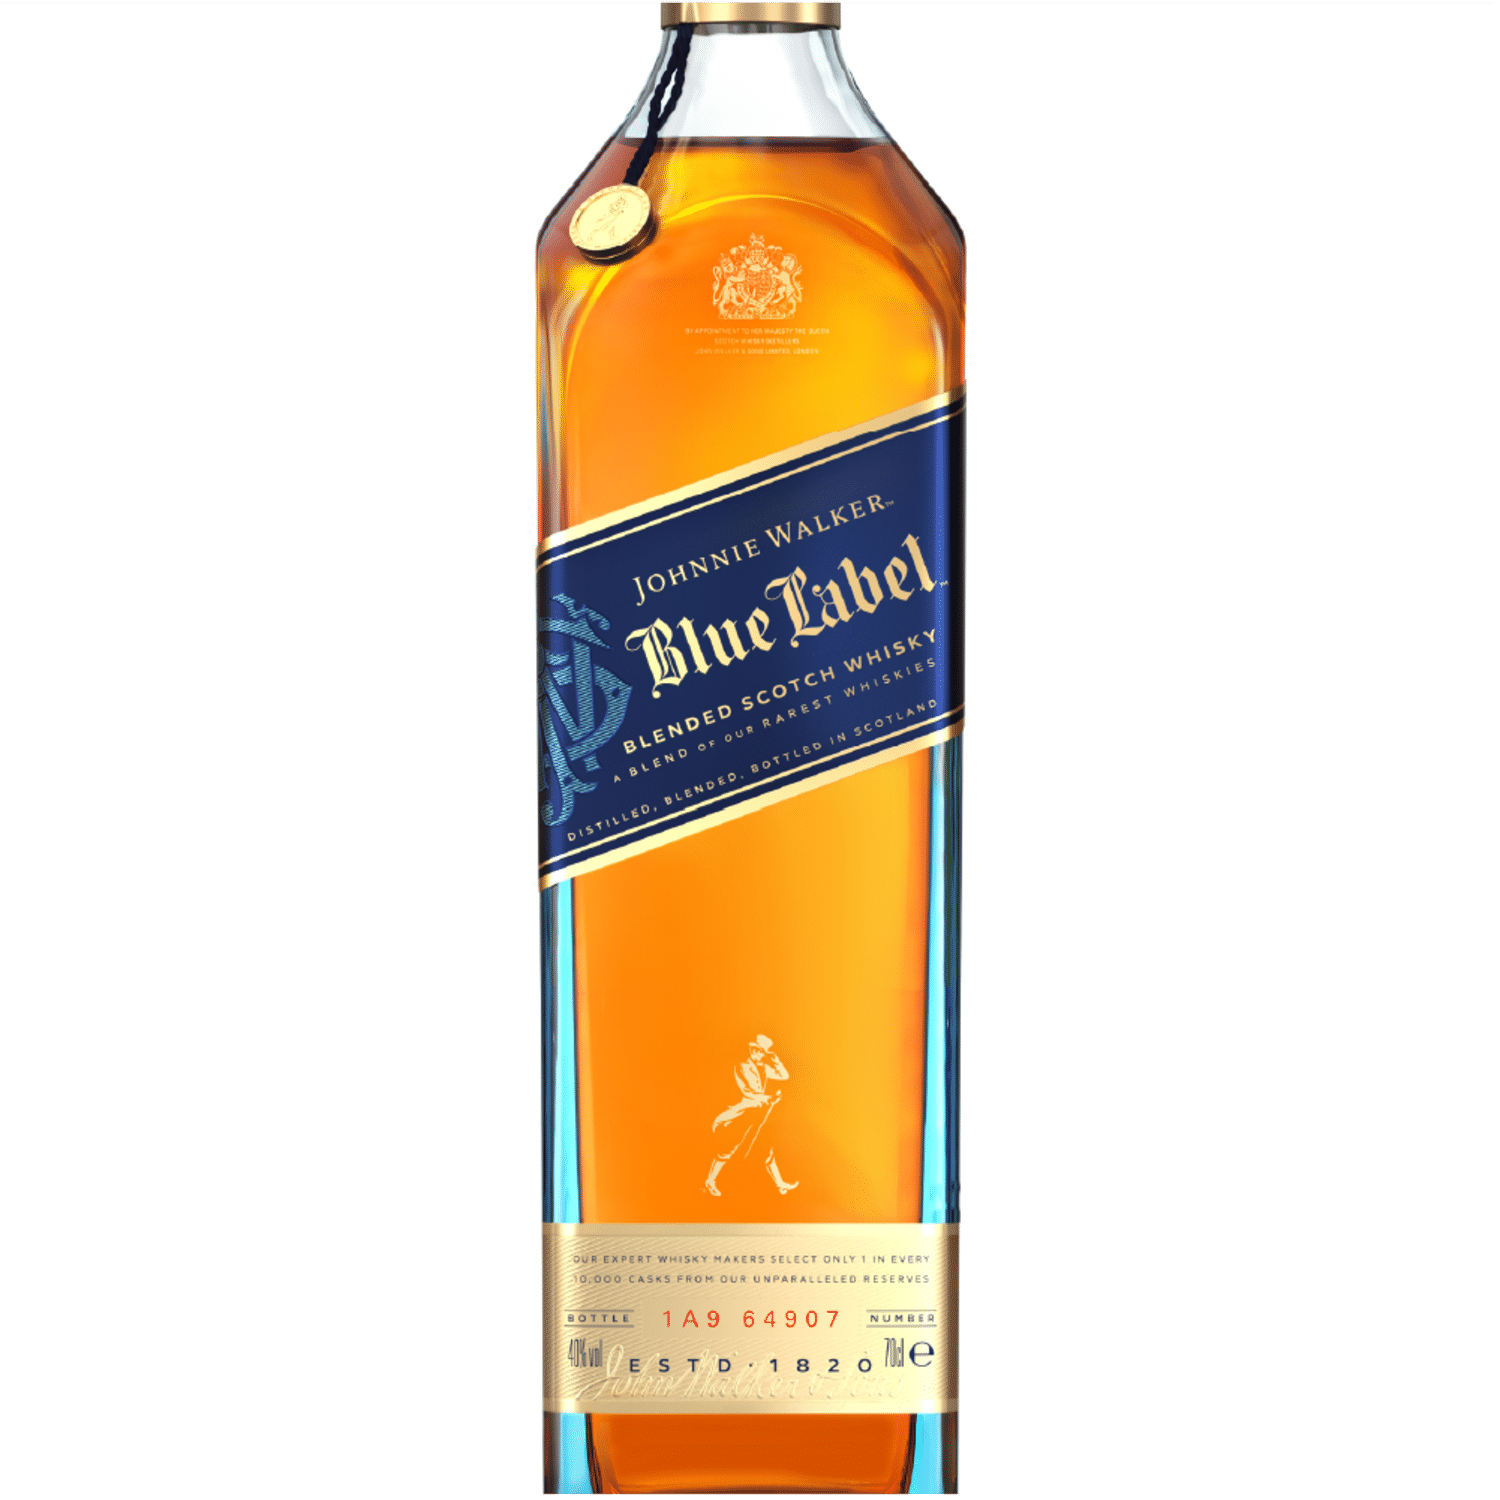 Whisky Escoces 21 Años Johnnie Walker Botella 750 Ml